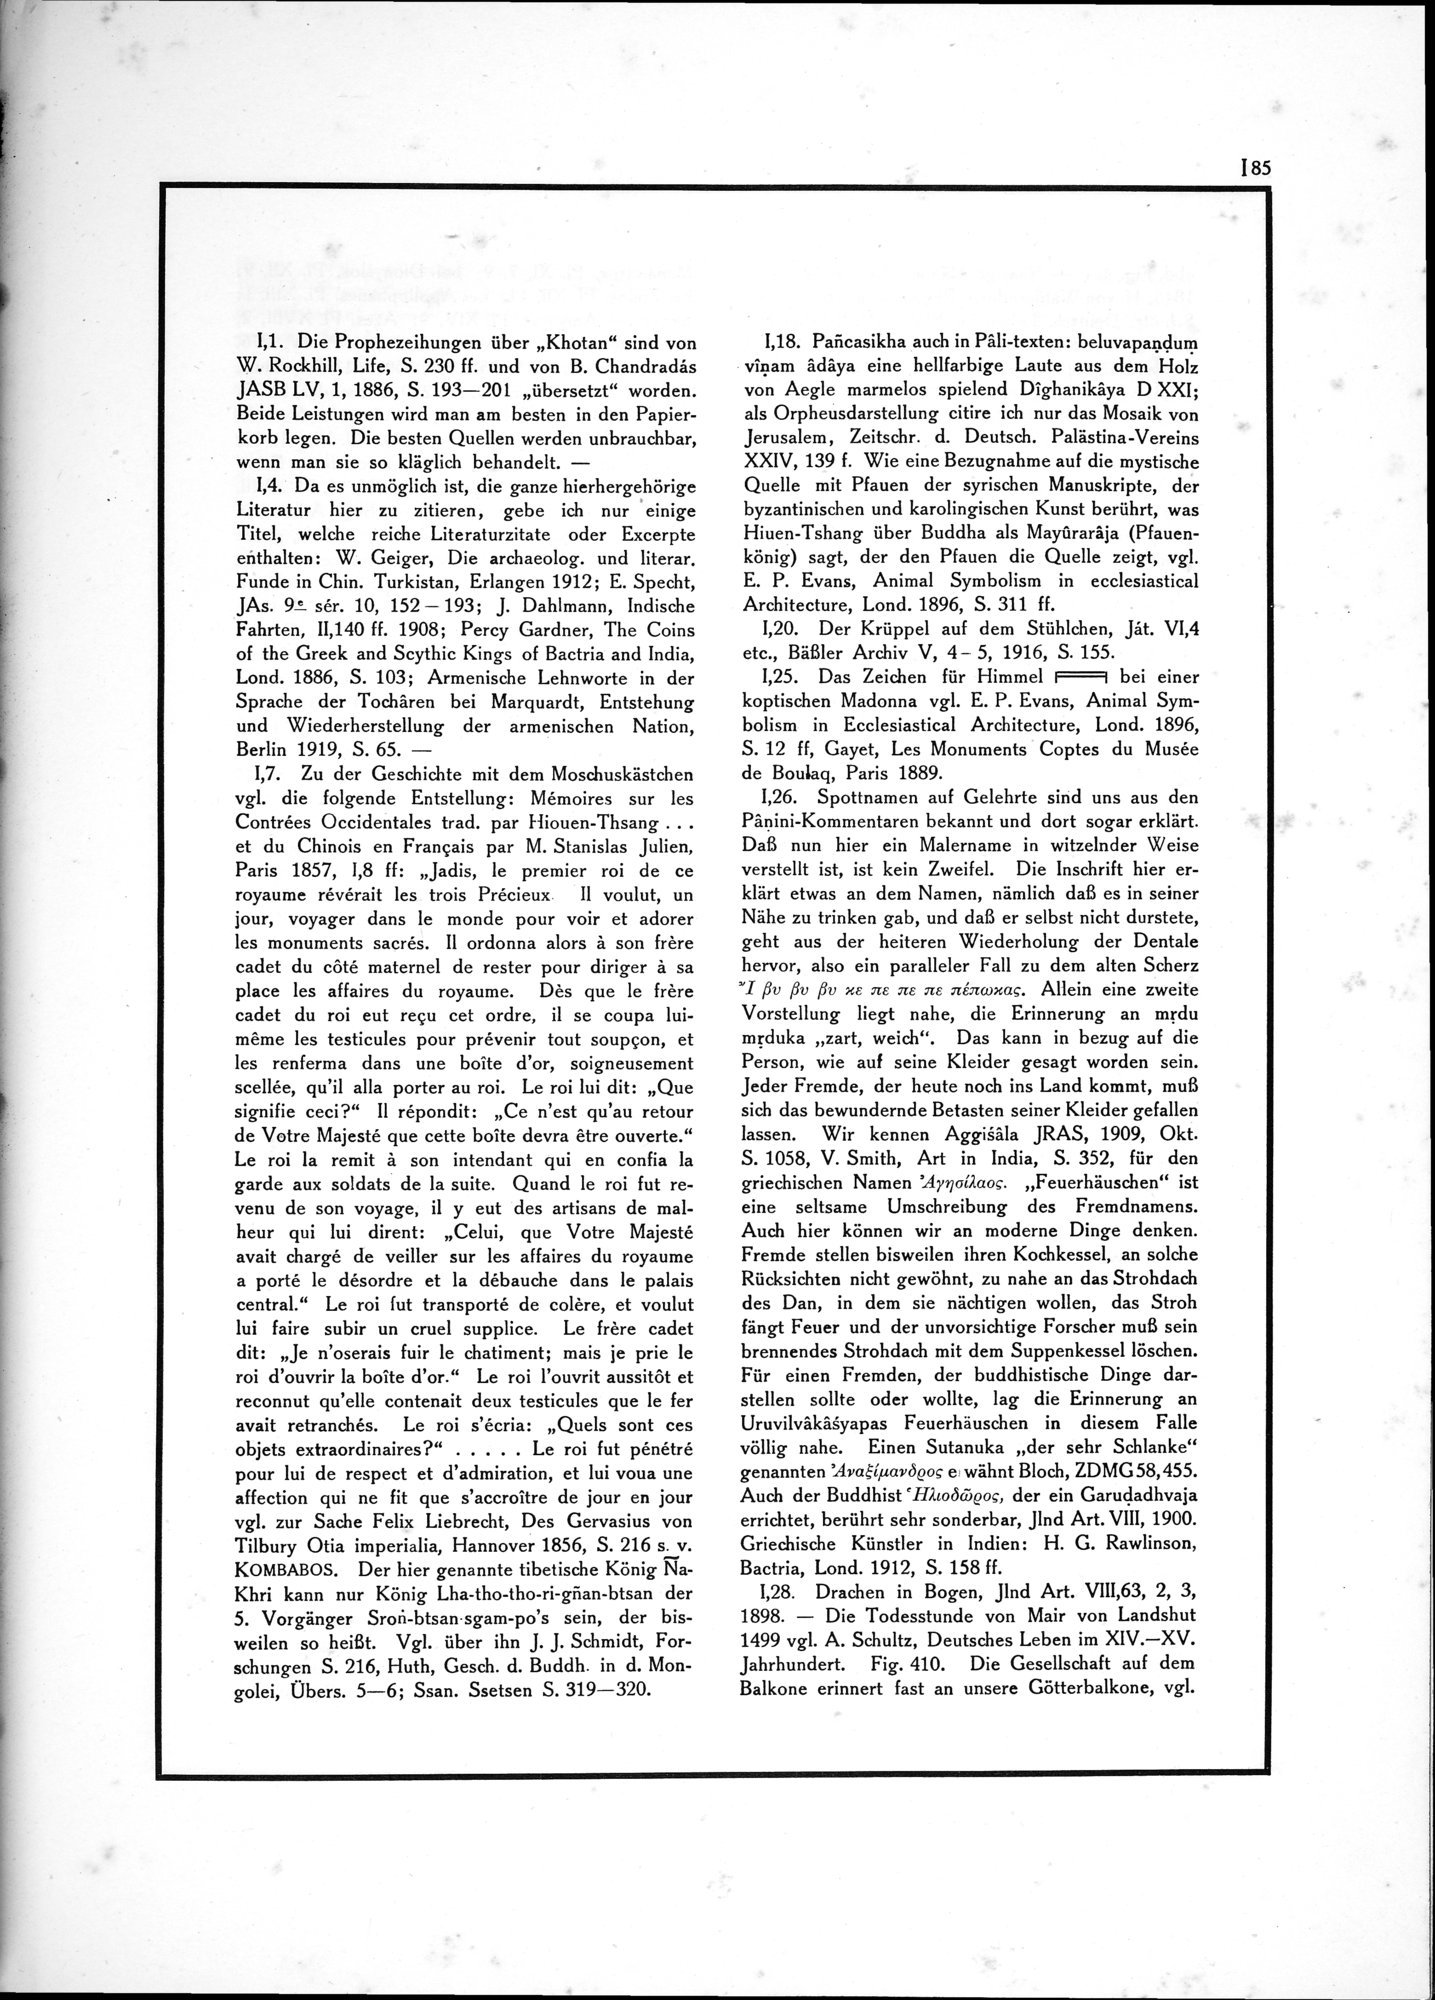 Alt-Kutscha : vol.1 / Page 97 (Grayscale High Resolution Image)